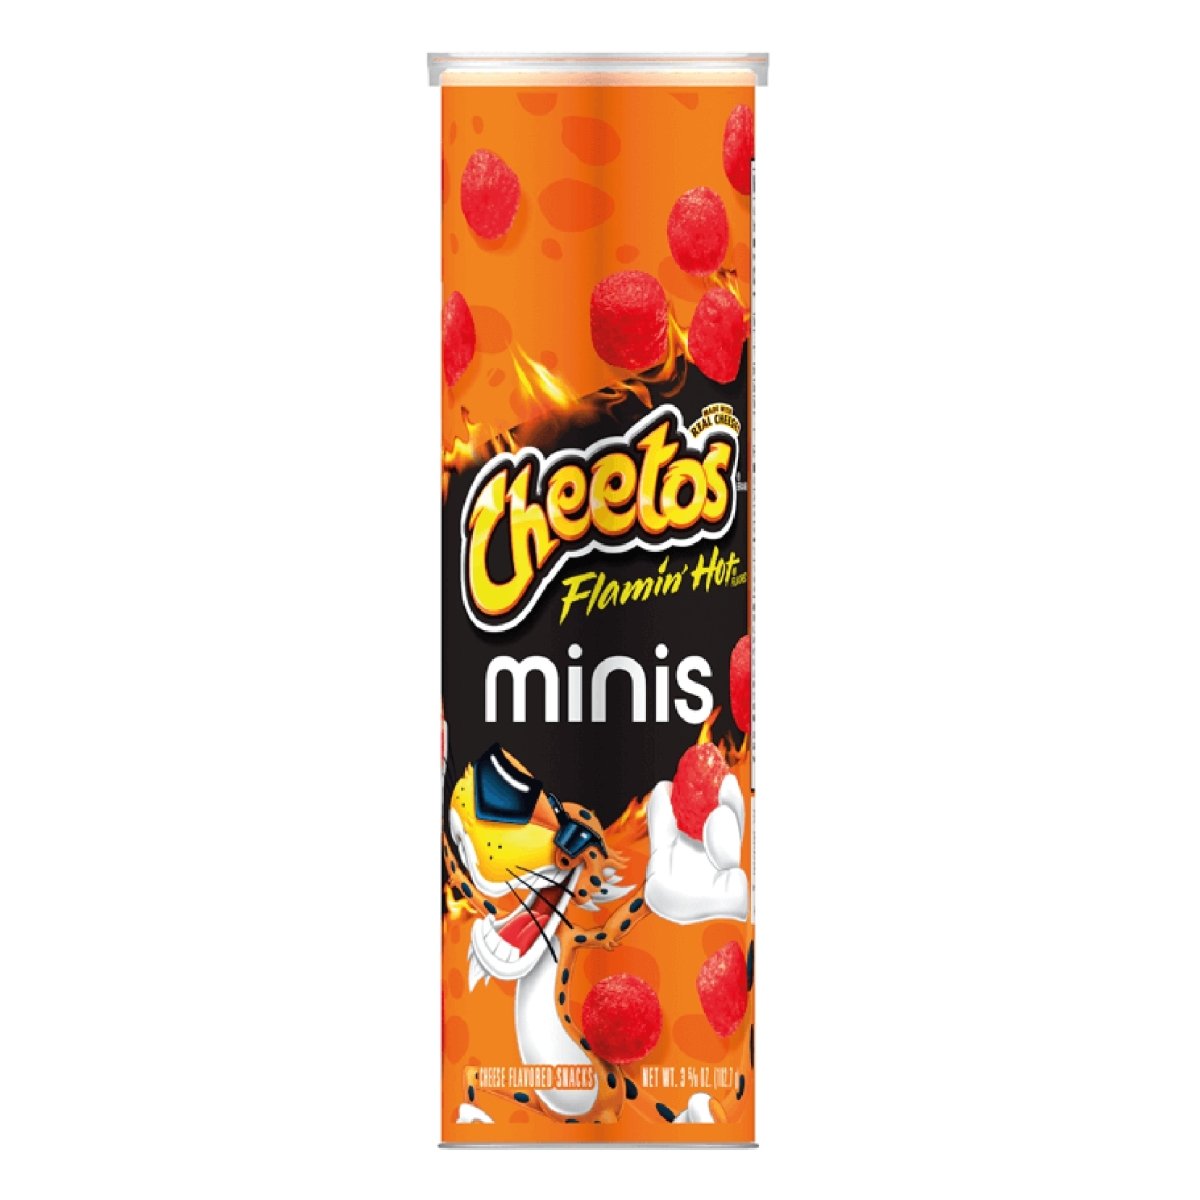 Cheetos Flamin’ Hot Minis 102g - Candy Mail UK